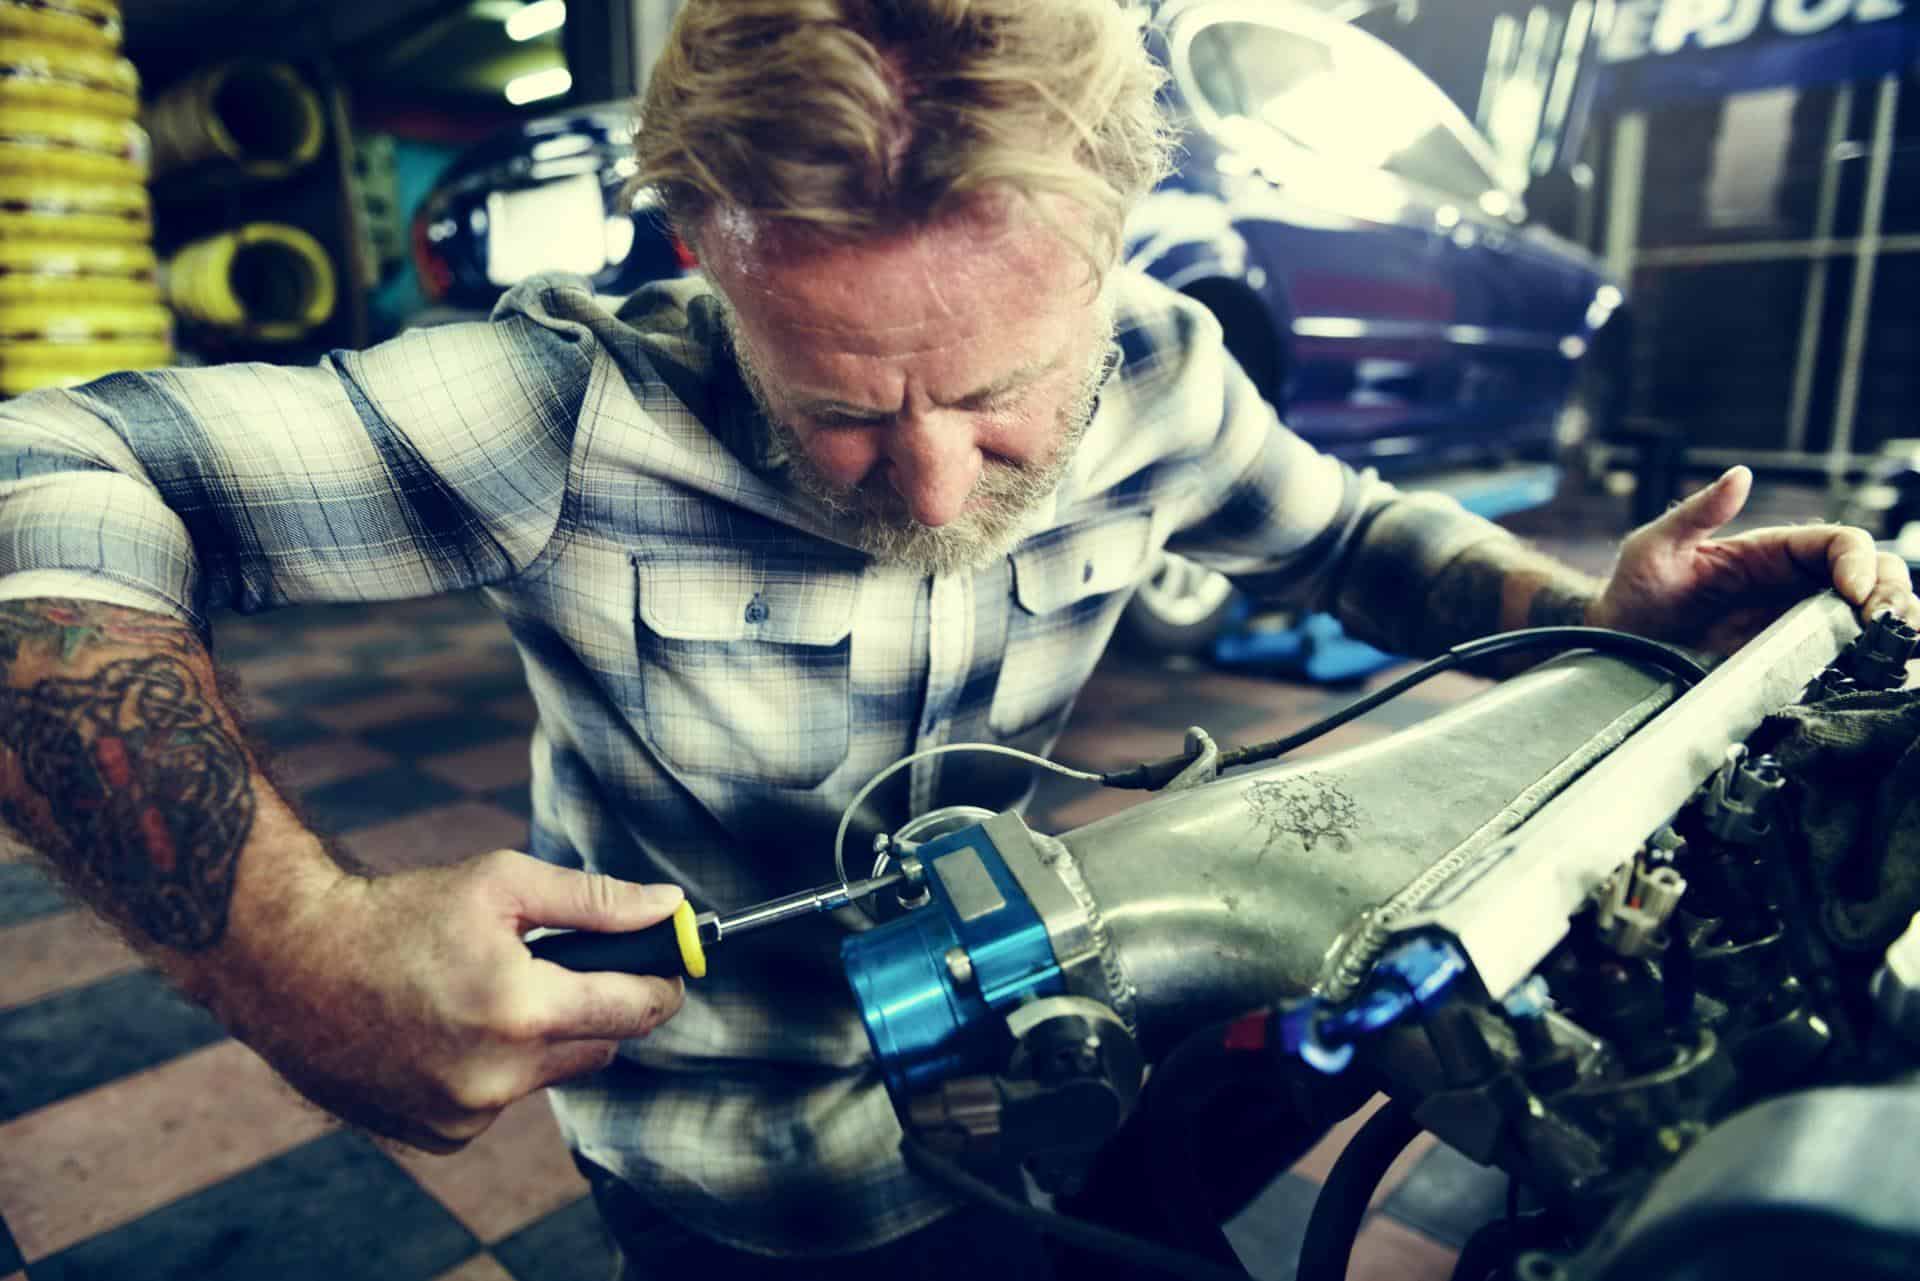 The strengths of a motor mechanic career